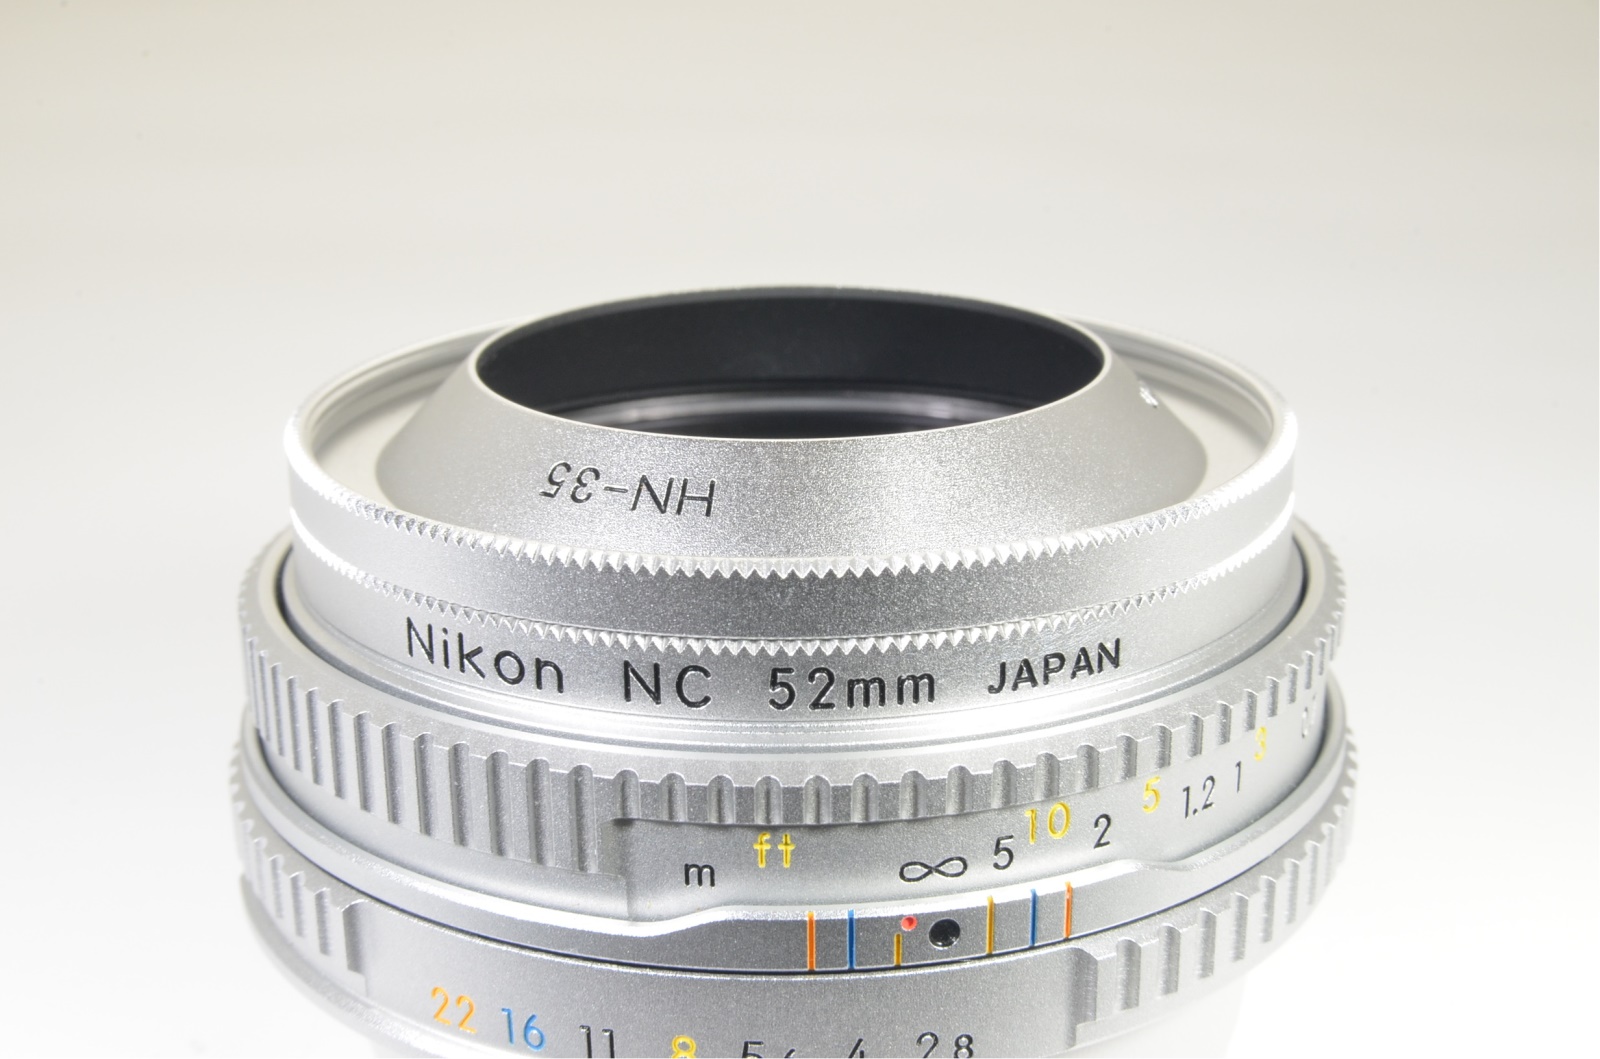 Nikon FM3A Silver 35mm Film Camera with Nikkor 45mm f/2.8P Film 